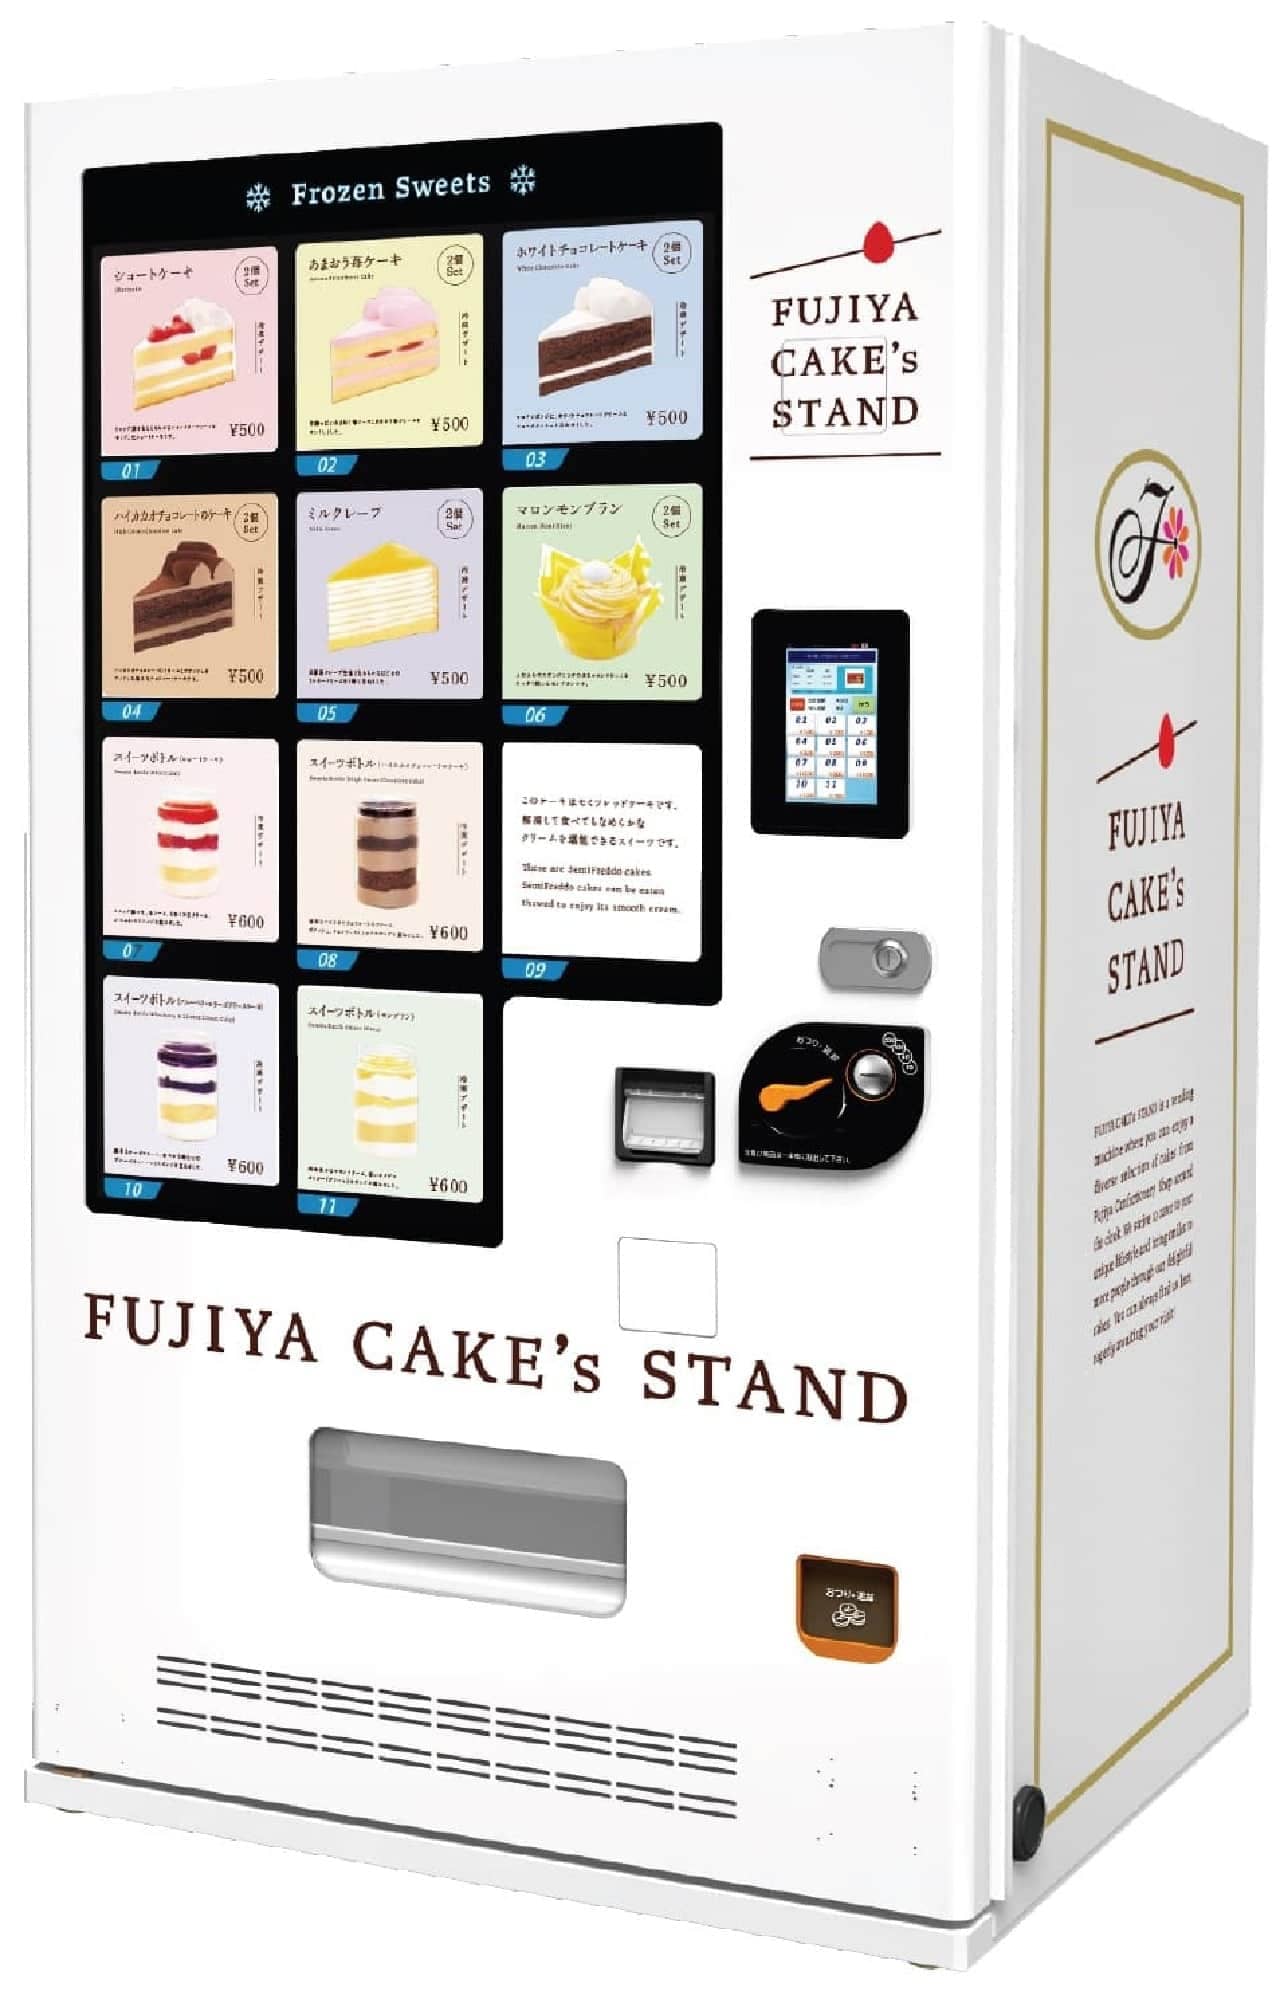 FUJIYA CAKE's STAND" frozen sweets vending machine by Fujiya